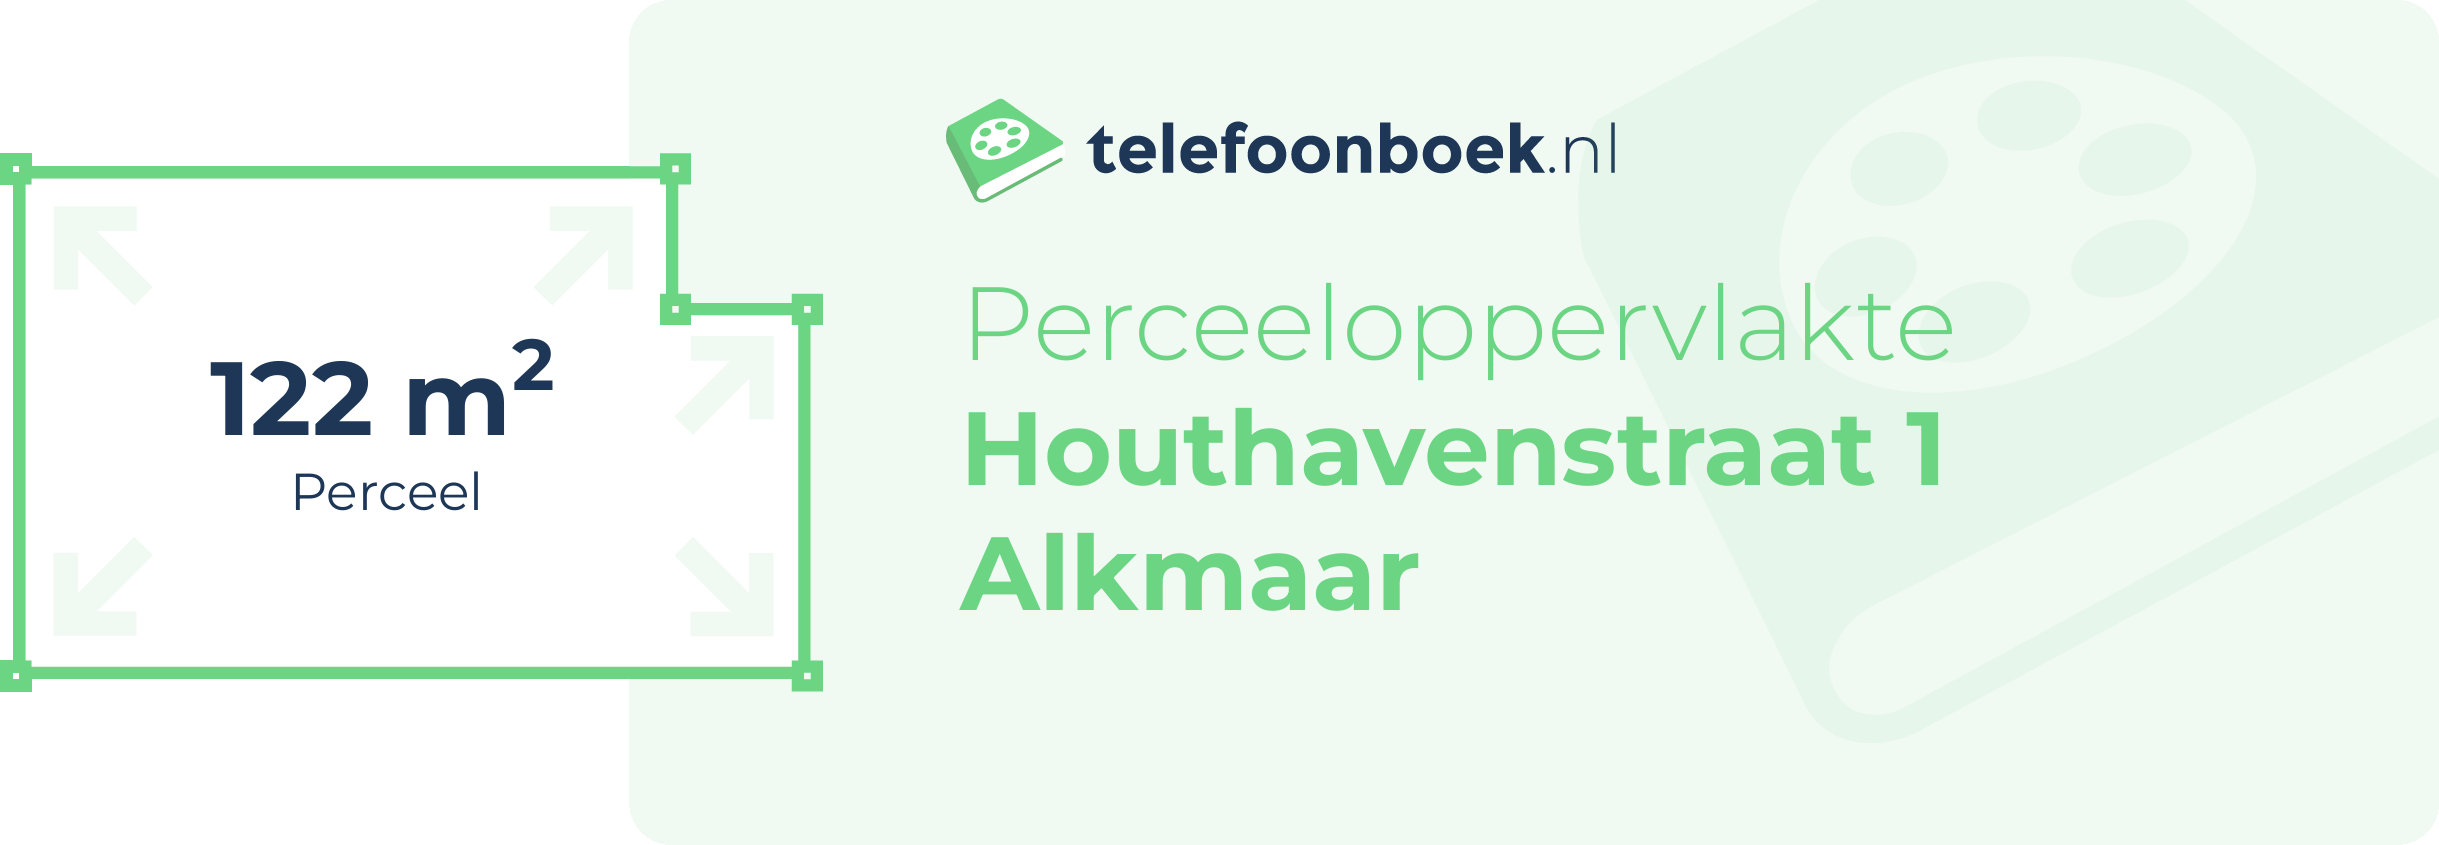 Perceeloppervlakte Houthavenstraat 1 Alkmaar